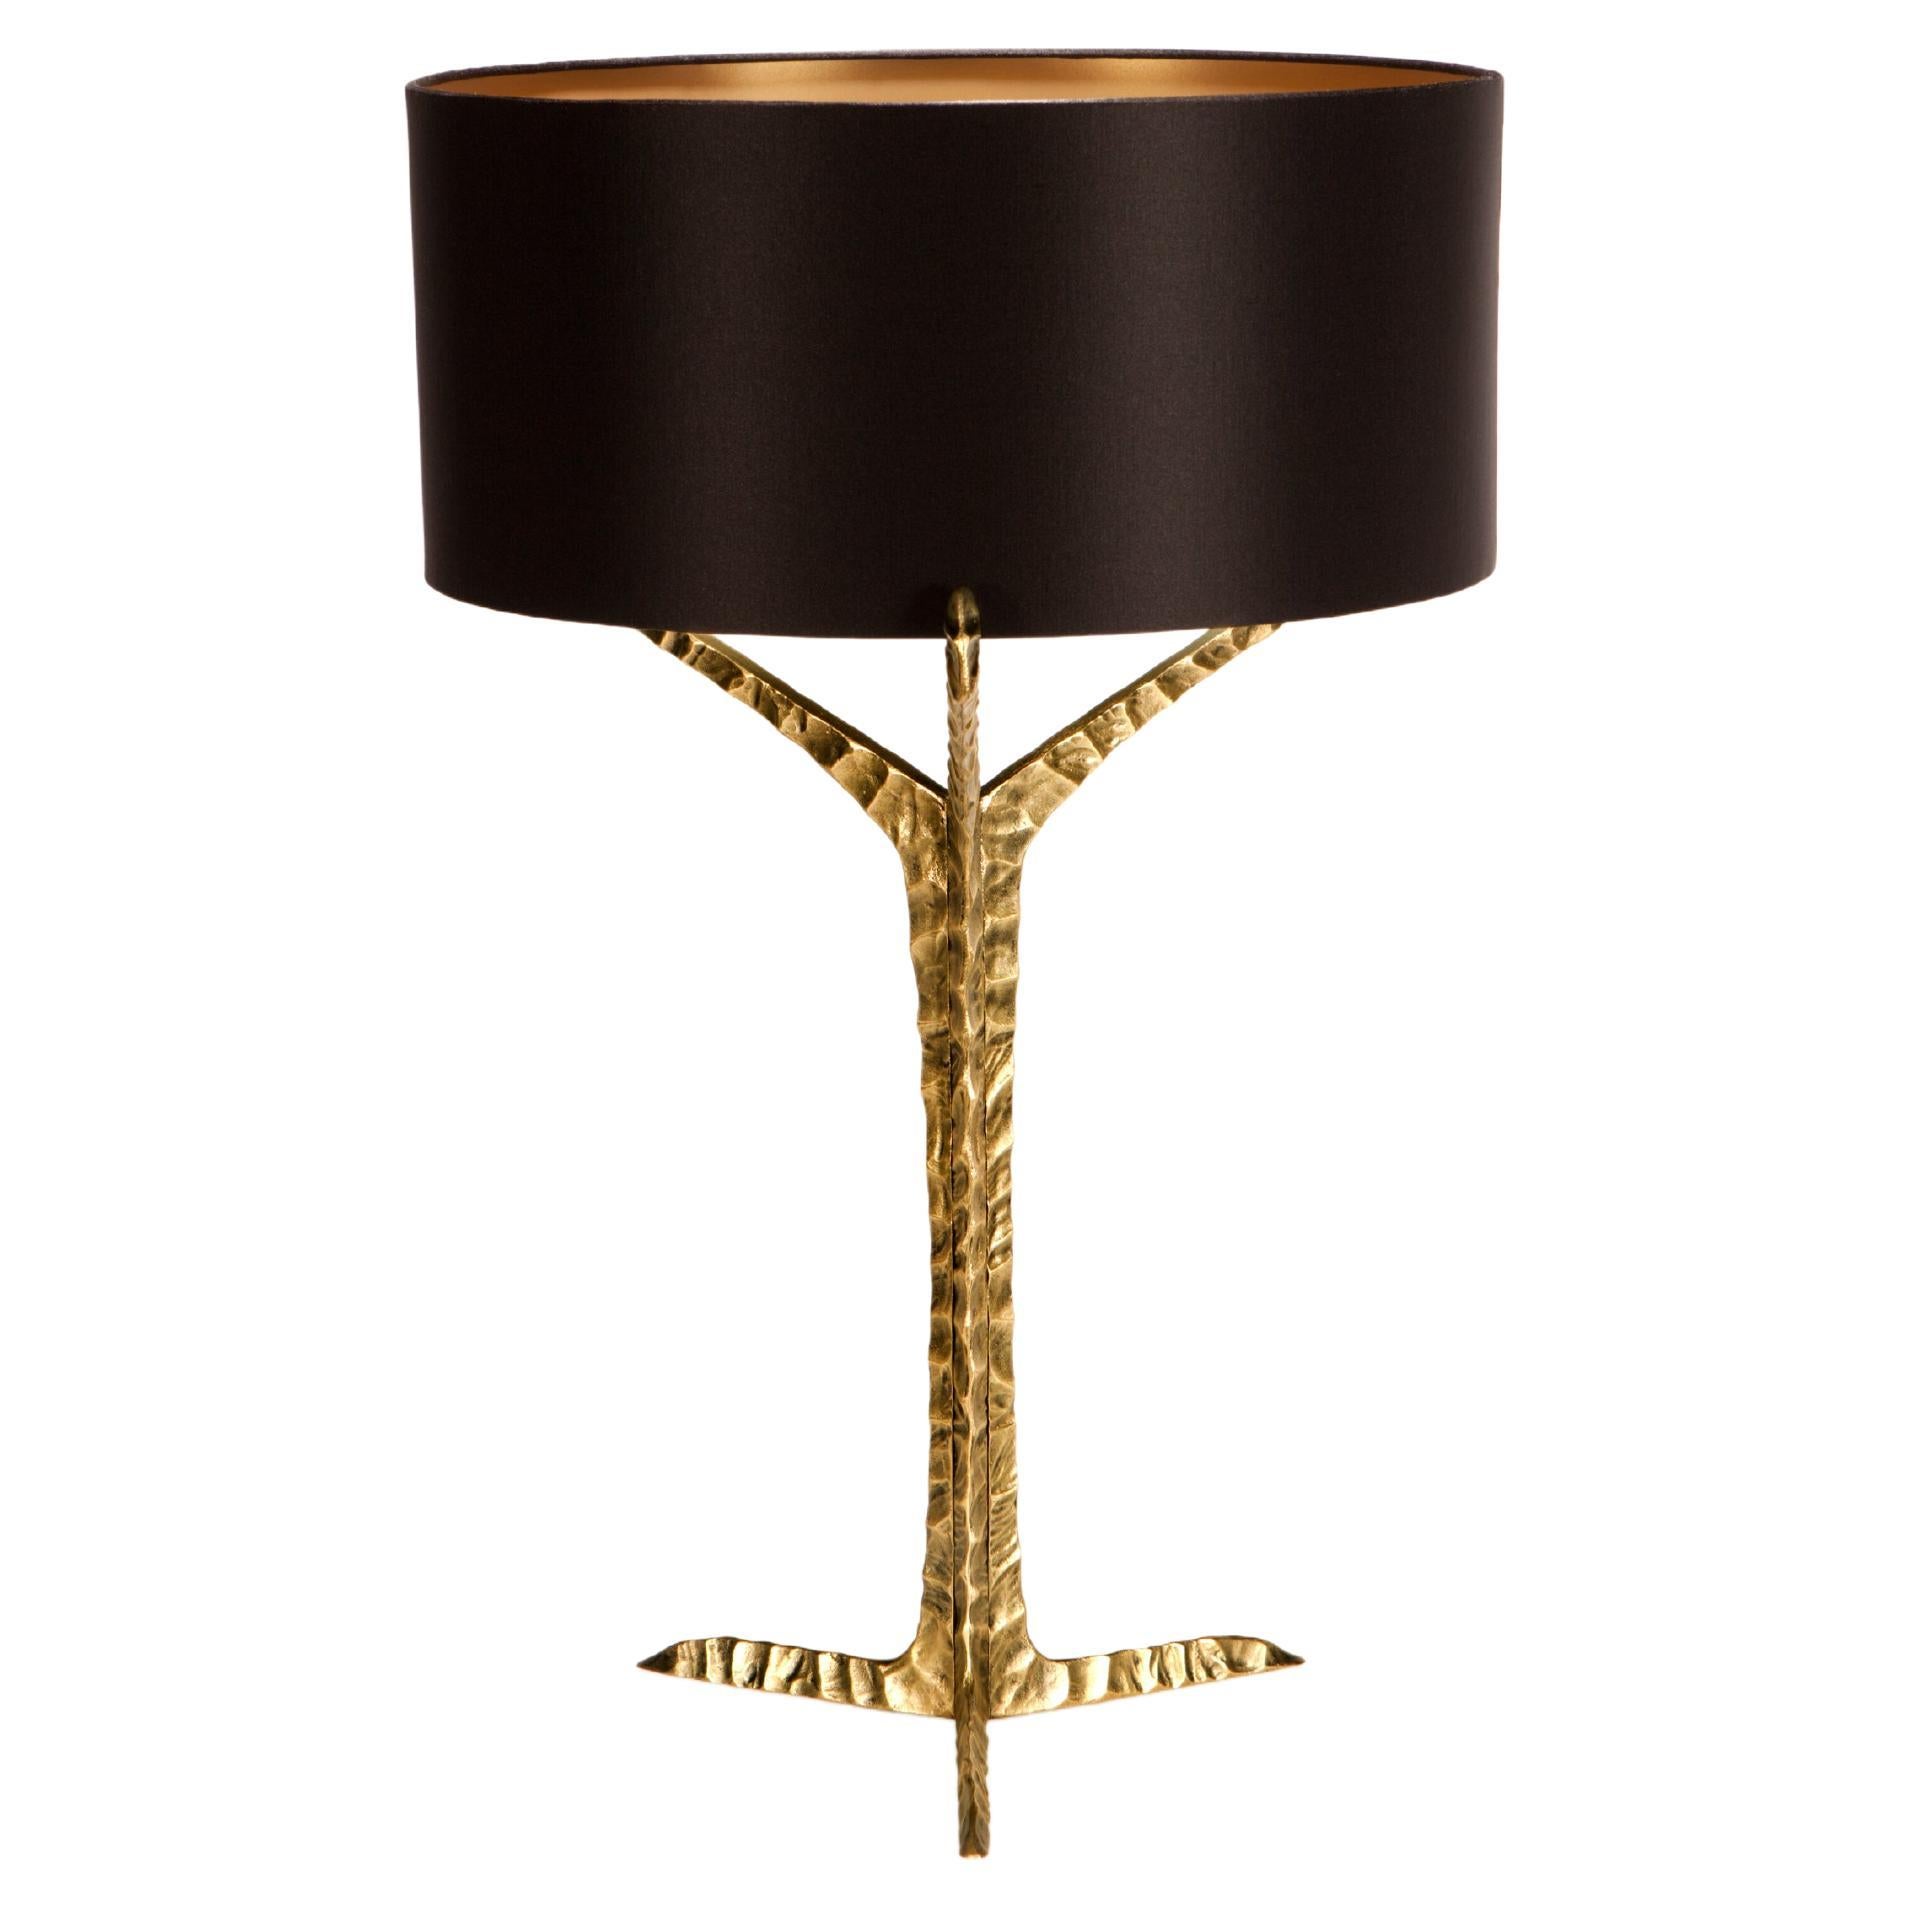 Alentejo Brass Table Lamp by InsidherLand